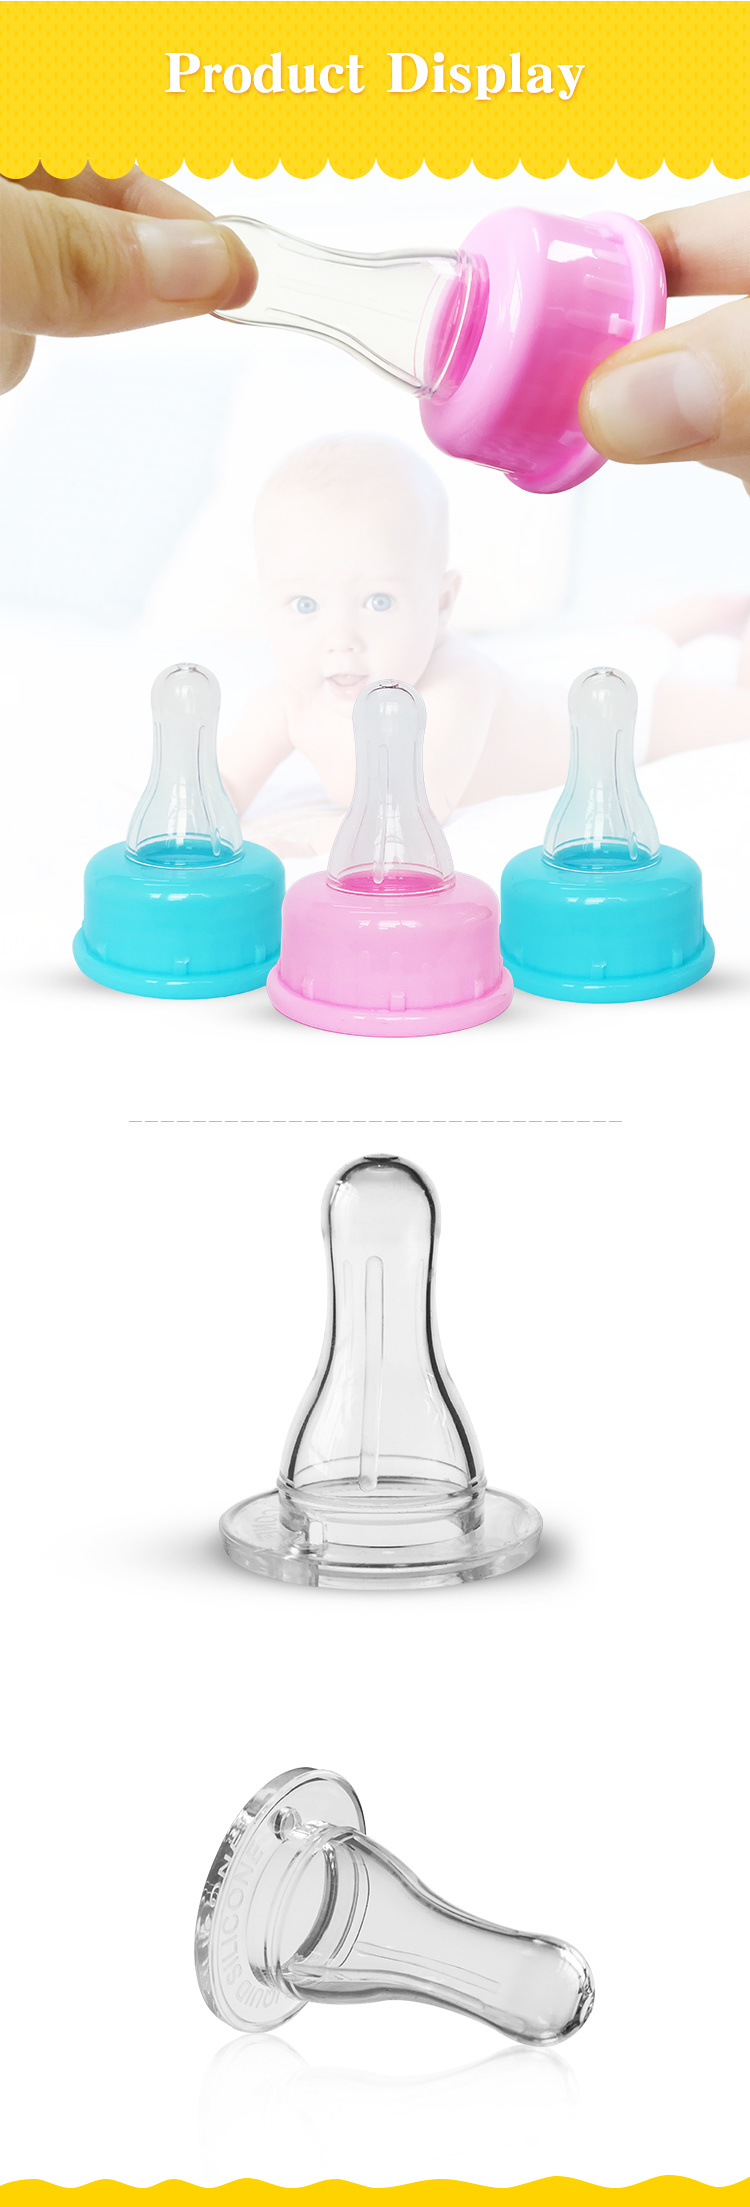 Standard-Neck Silicone Nipple Taet Baby Feeding Bottle Nipple